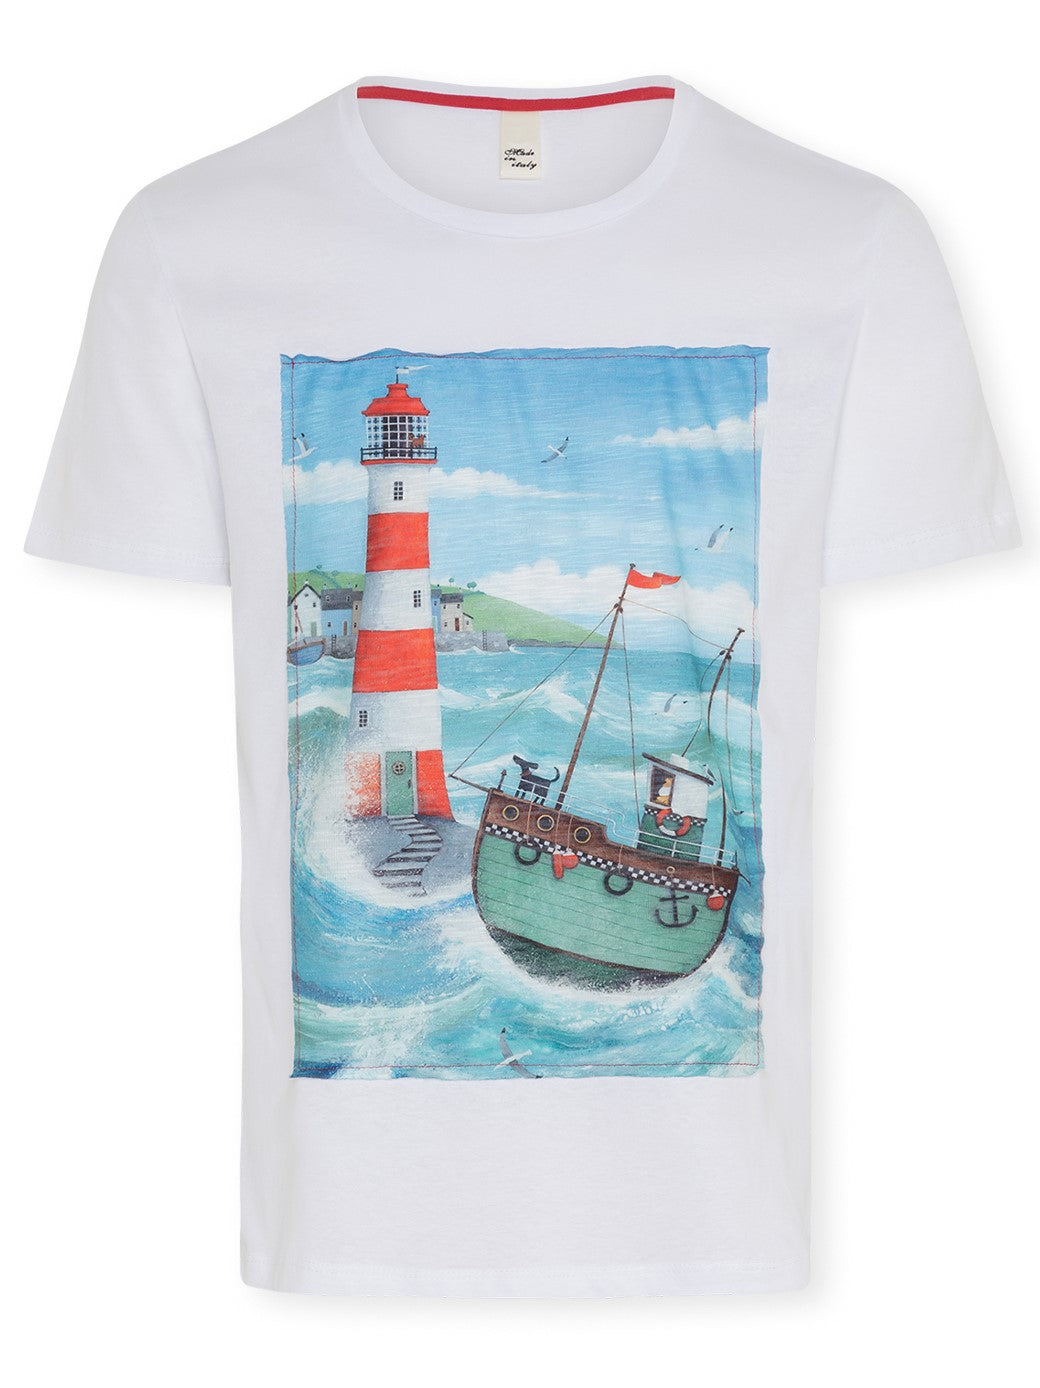 Poseidon - das Seefahrer T-Shirt - von SOLO LUI